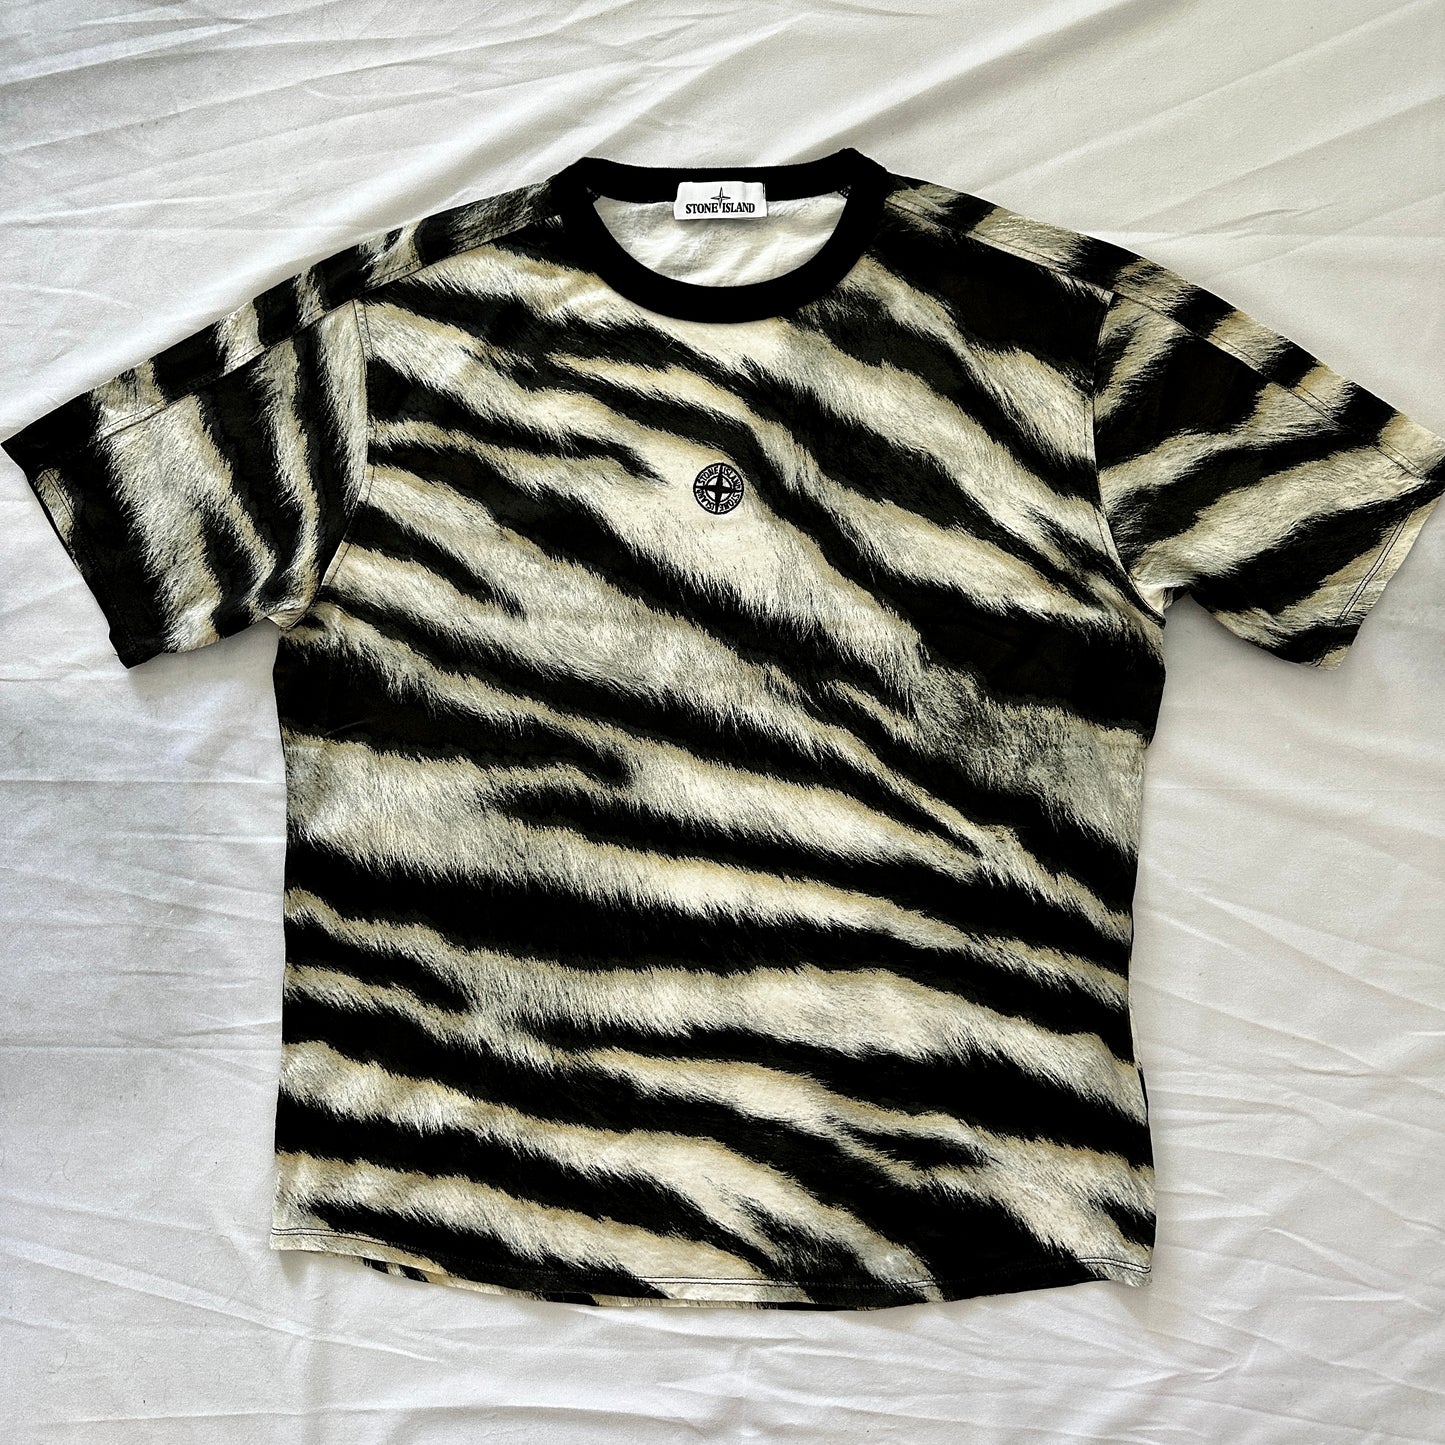 Stone Island White Tiger Camo T-Shirt 2018 - XL